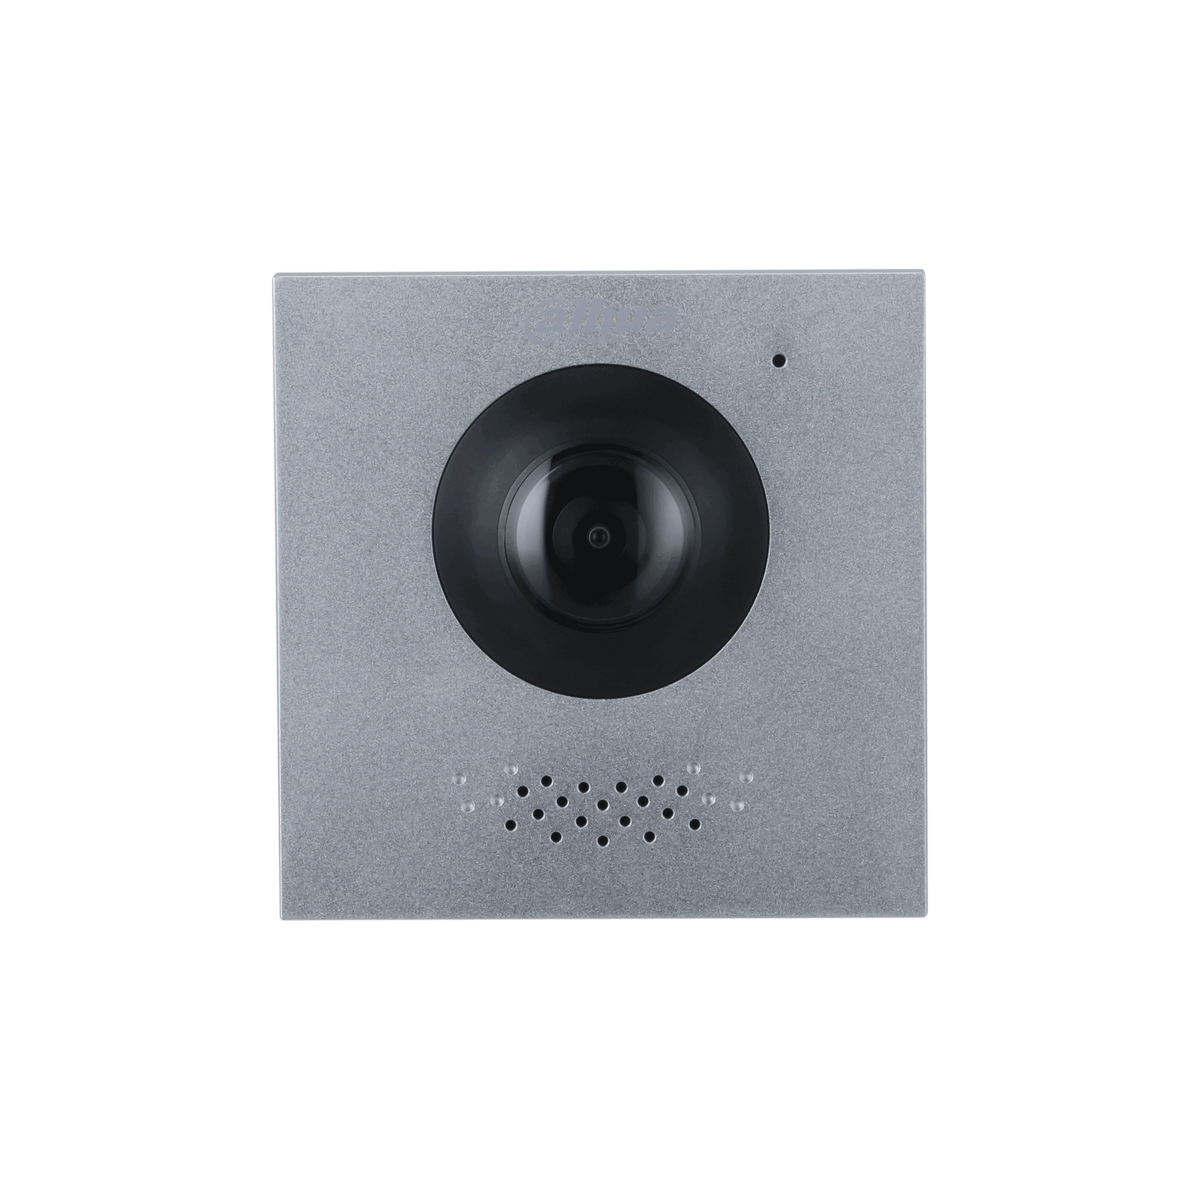 Modular Outdoor Station Camera module DHI-VTO4202F-P